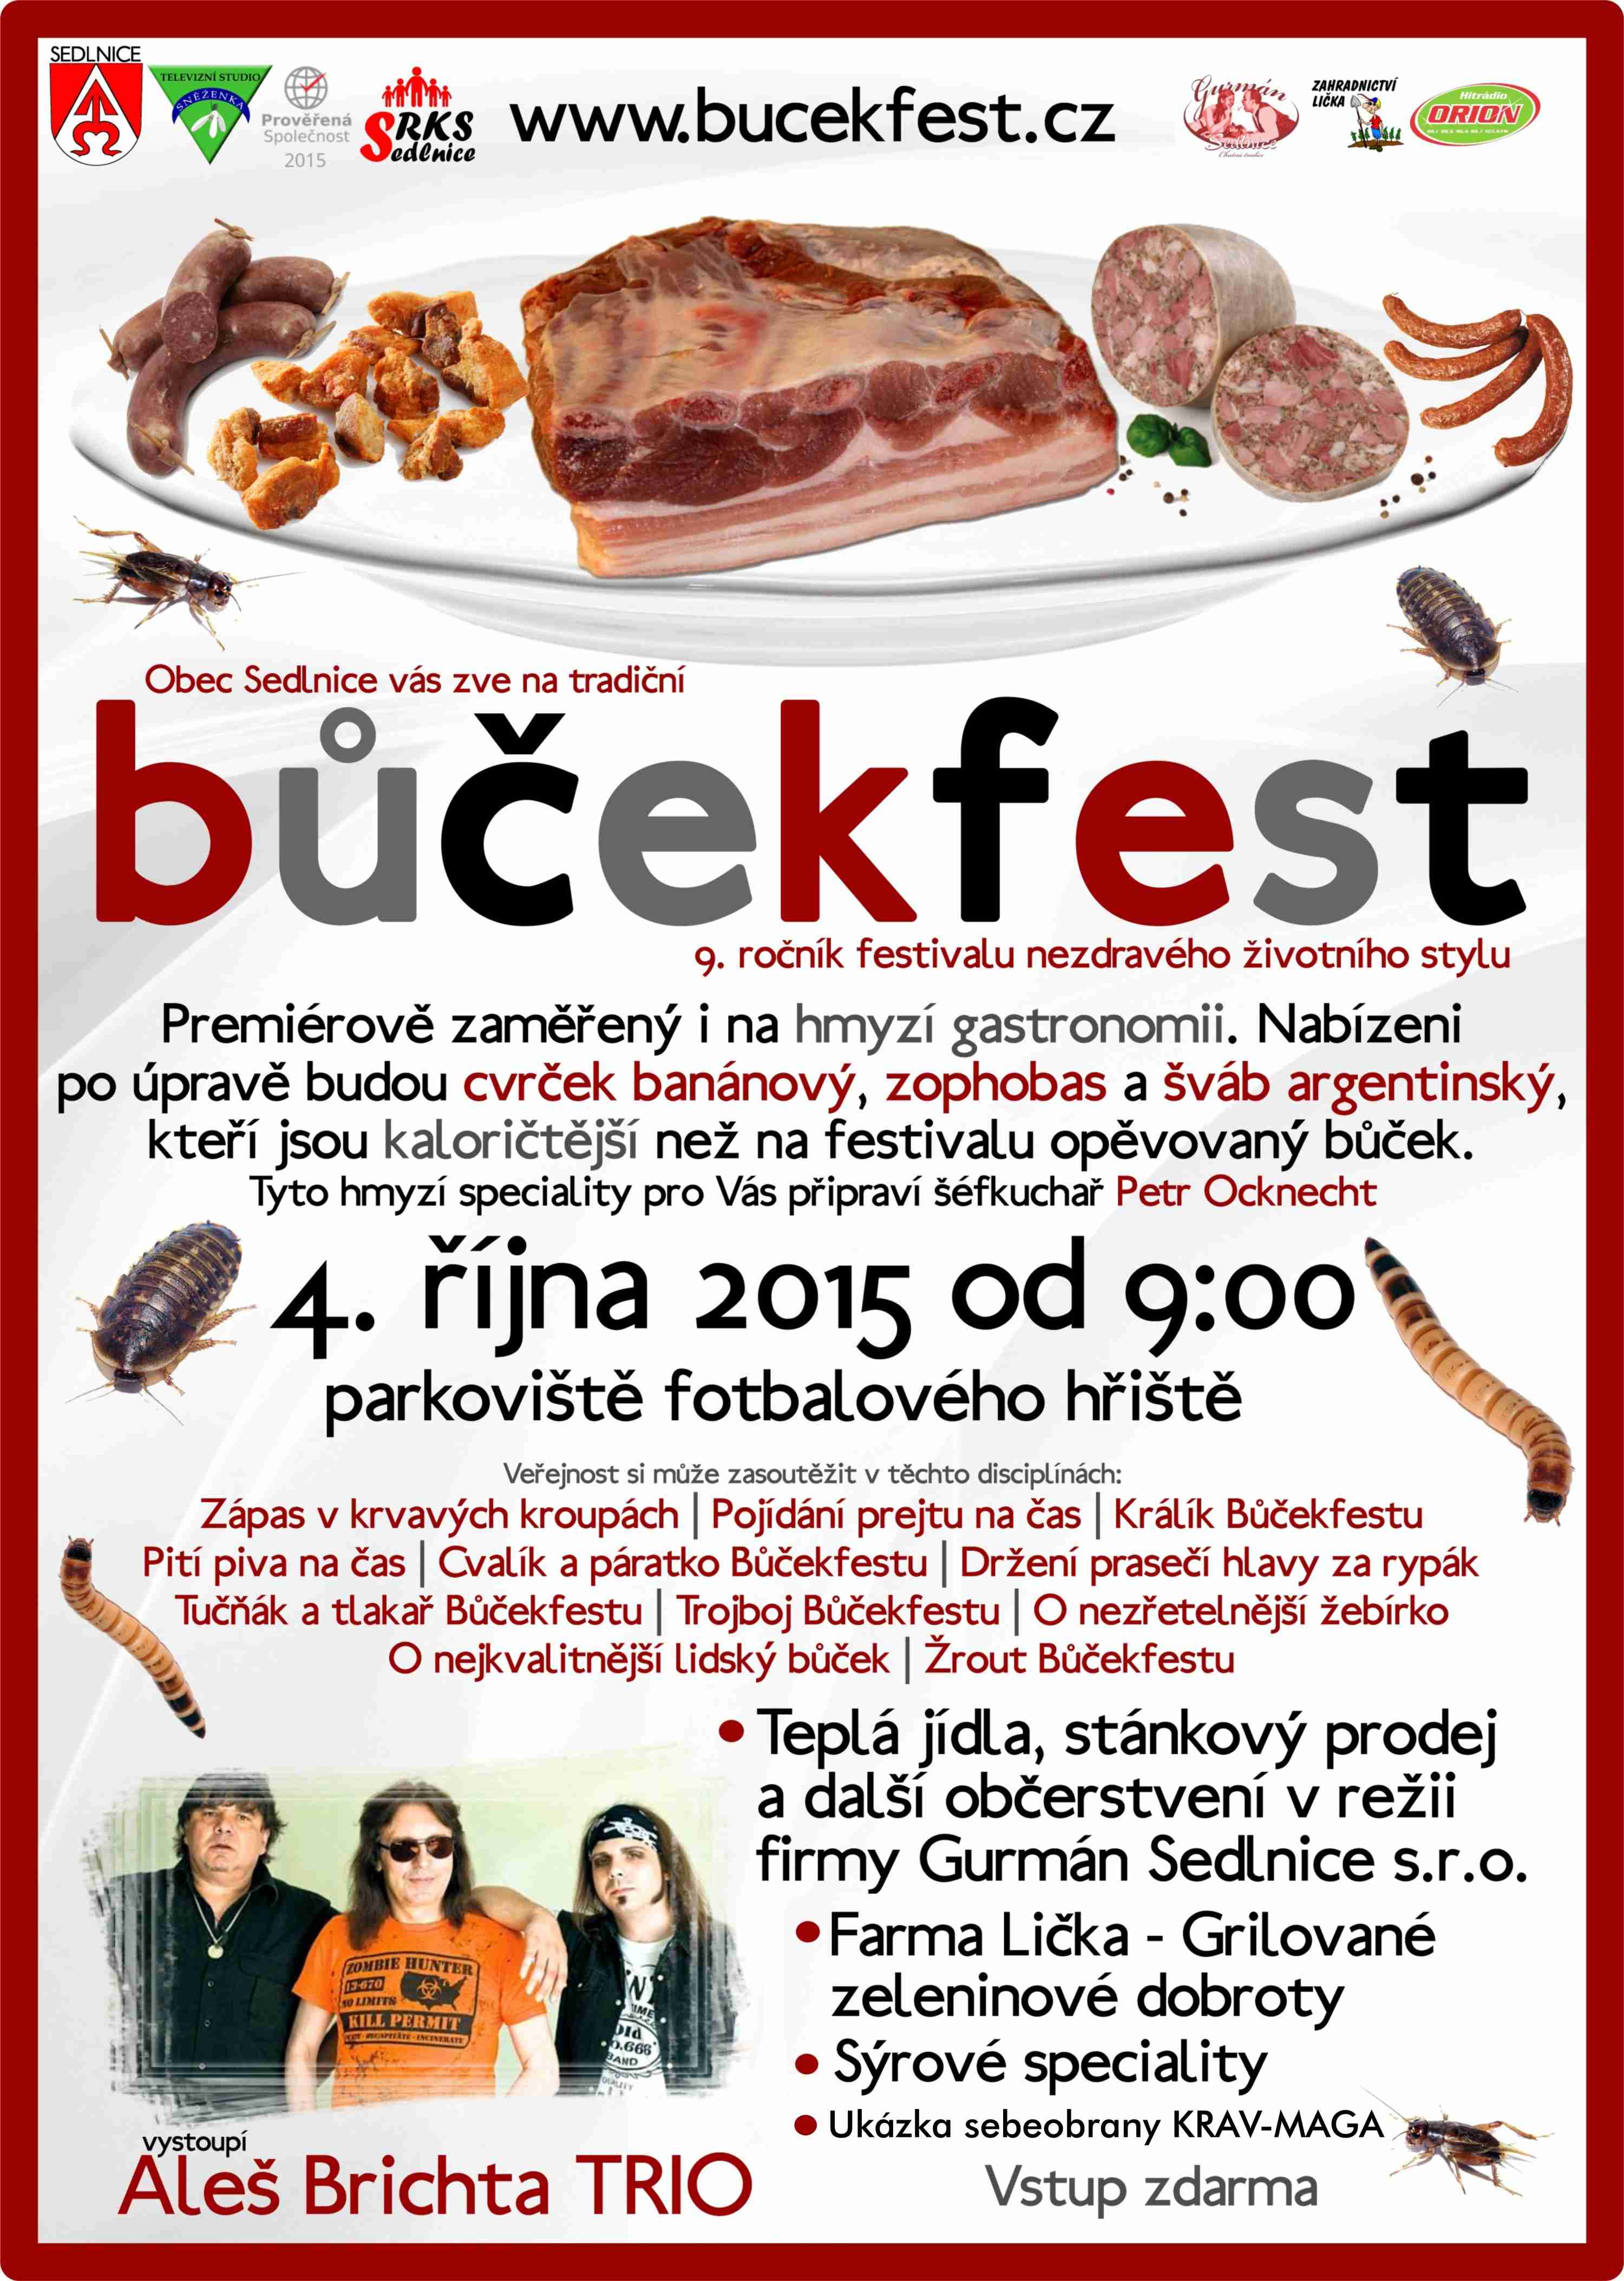 http://www.bucekfest.cz/OBRAZKY/bucekfest_2015.jpg